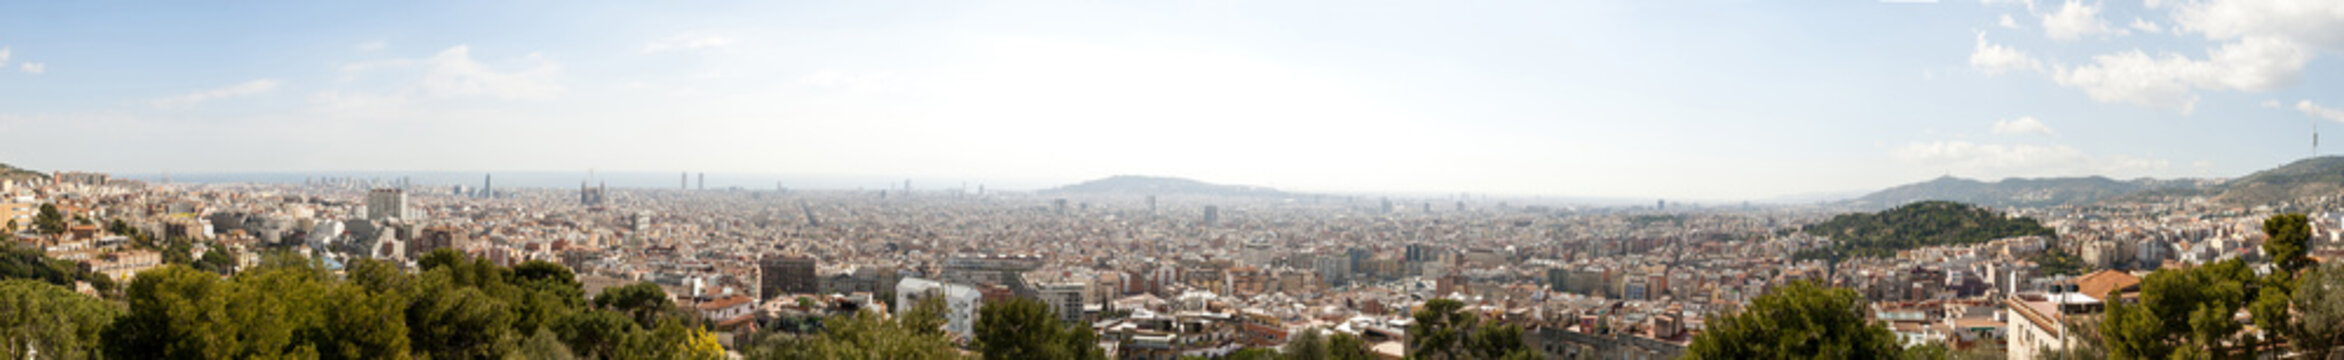 Panorama of Barcelona, Catalonia, Spain